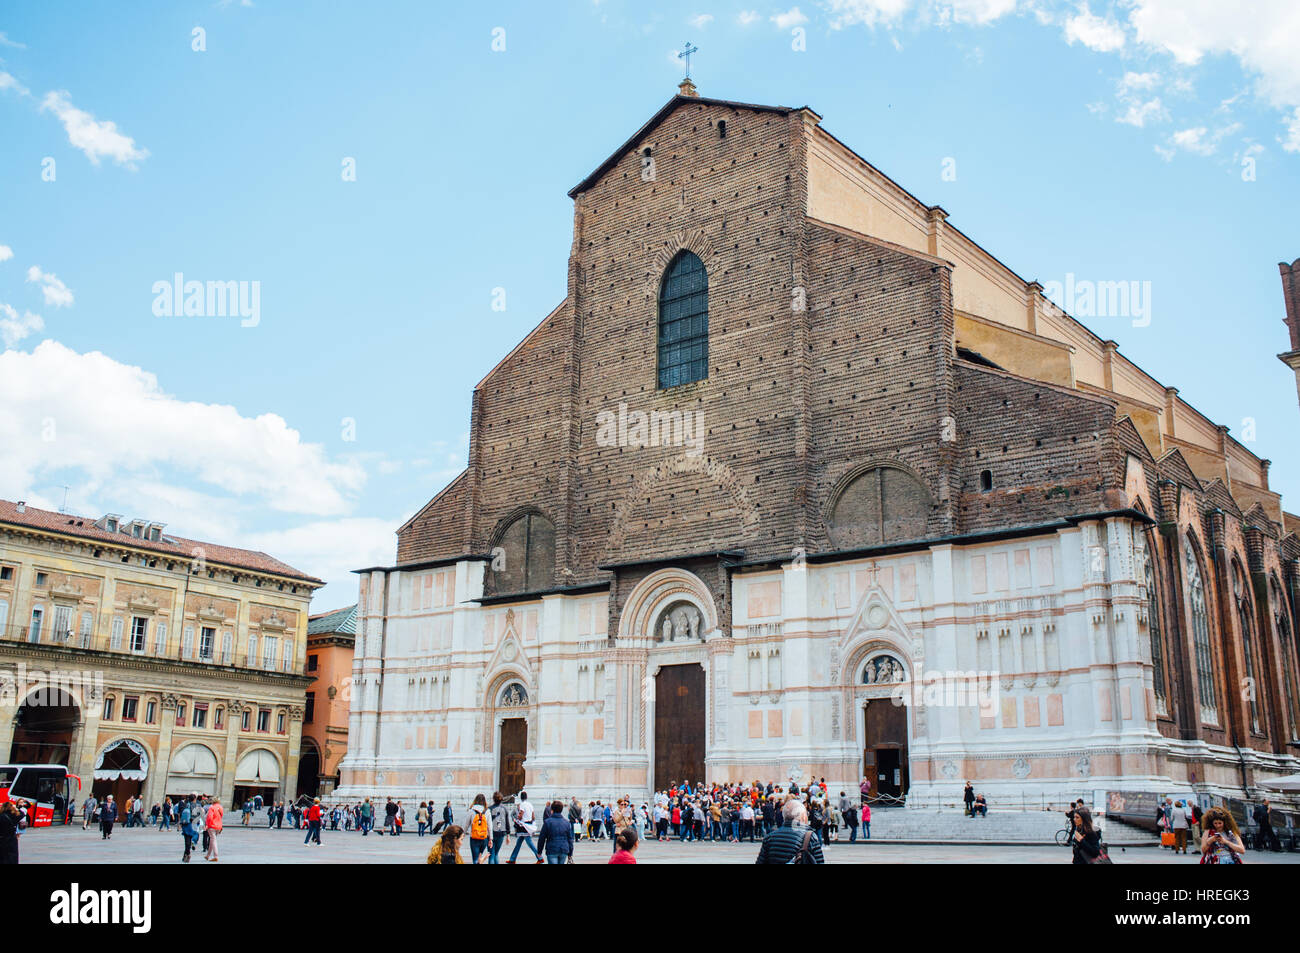 Tourists visiting the Basilica di San Petronio which is located at the Piazza Maggiore in Bologna, Italy. Stock Photo